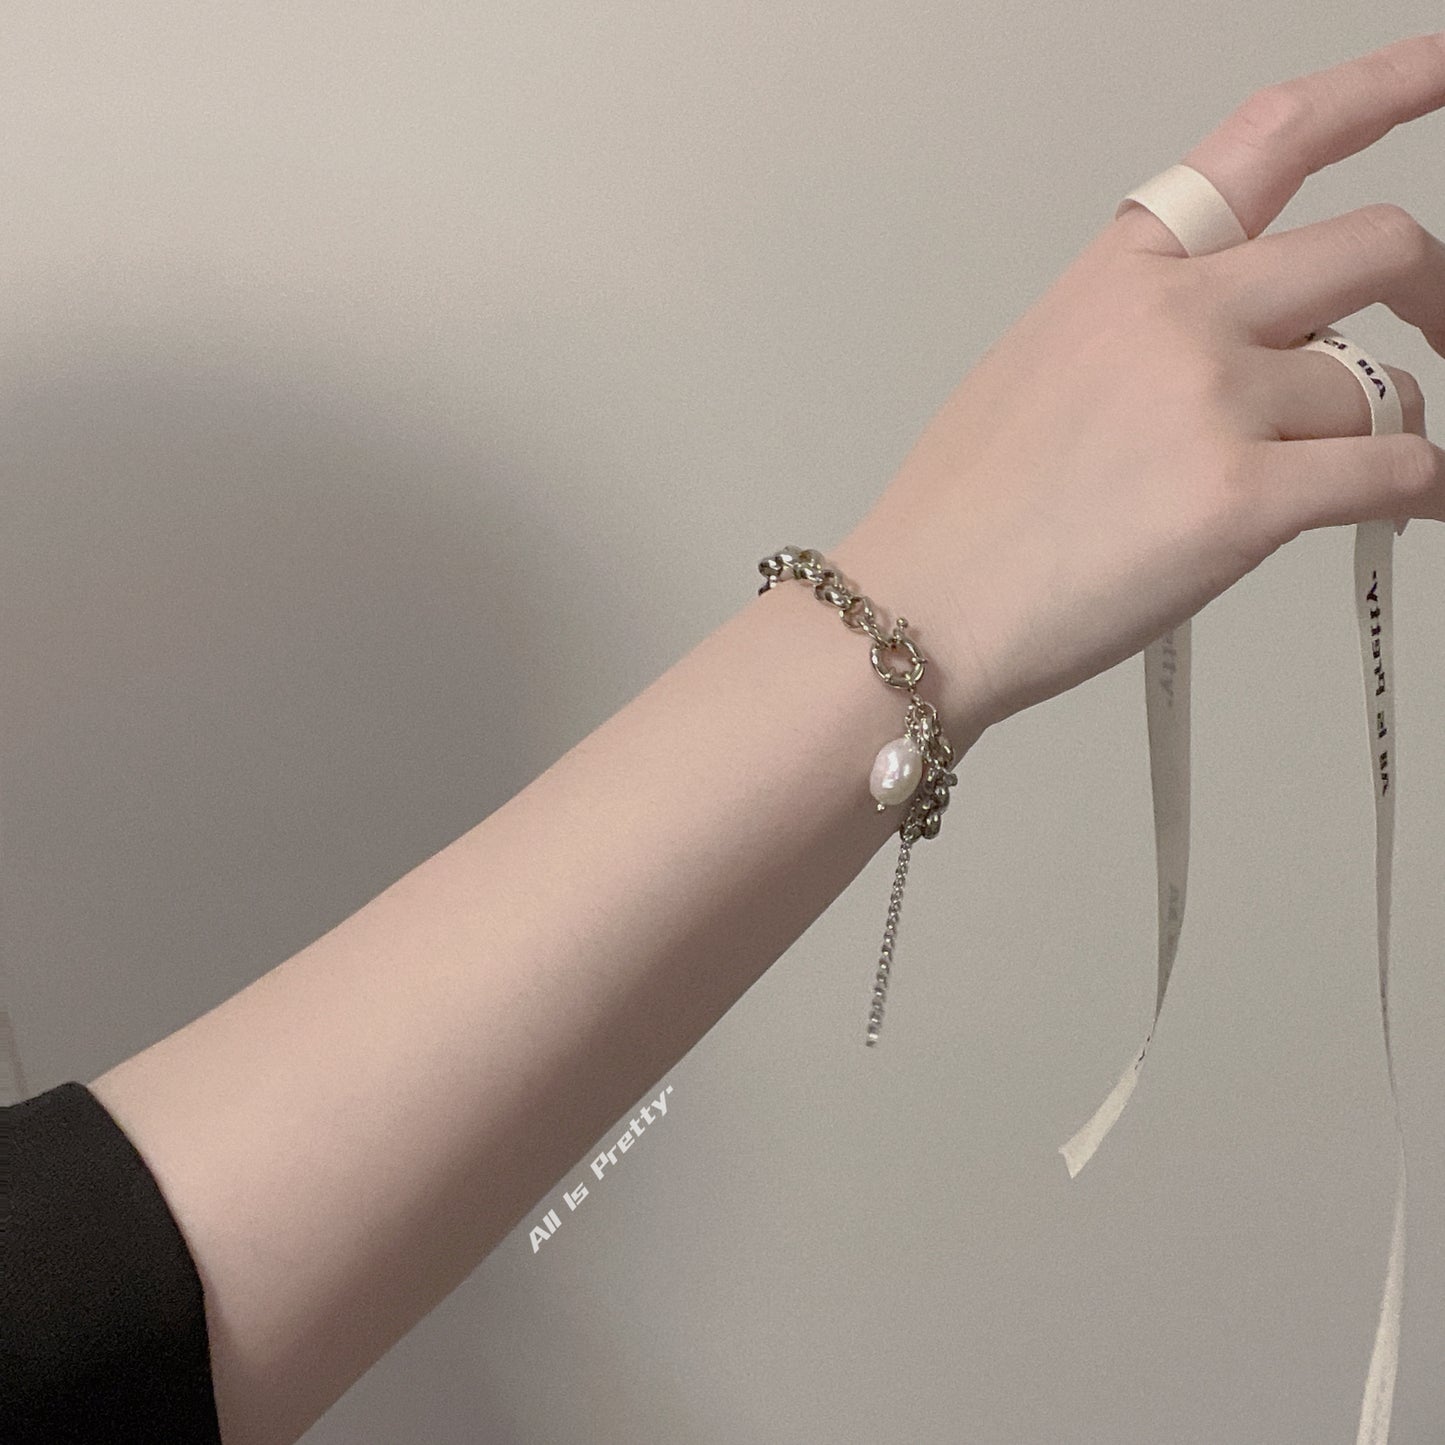 Pearl pendant gold-plated bracelet